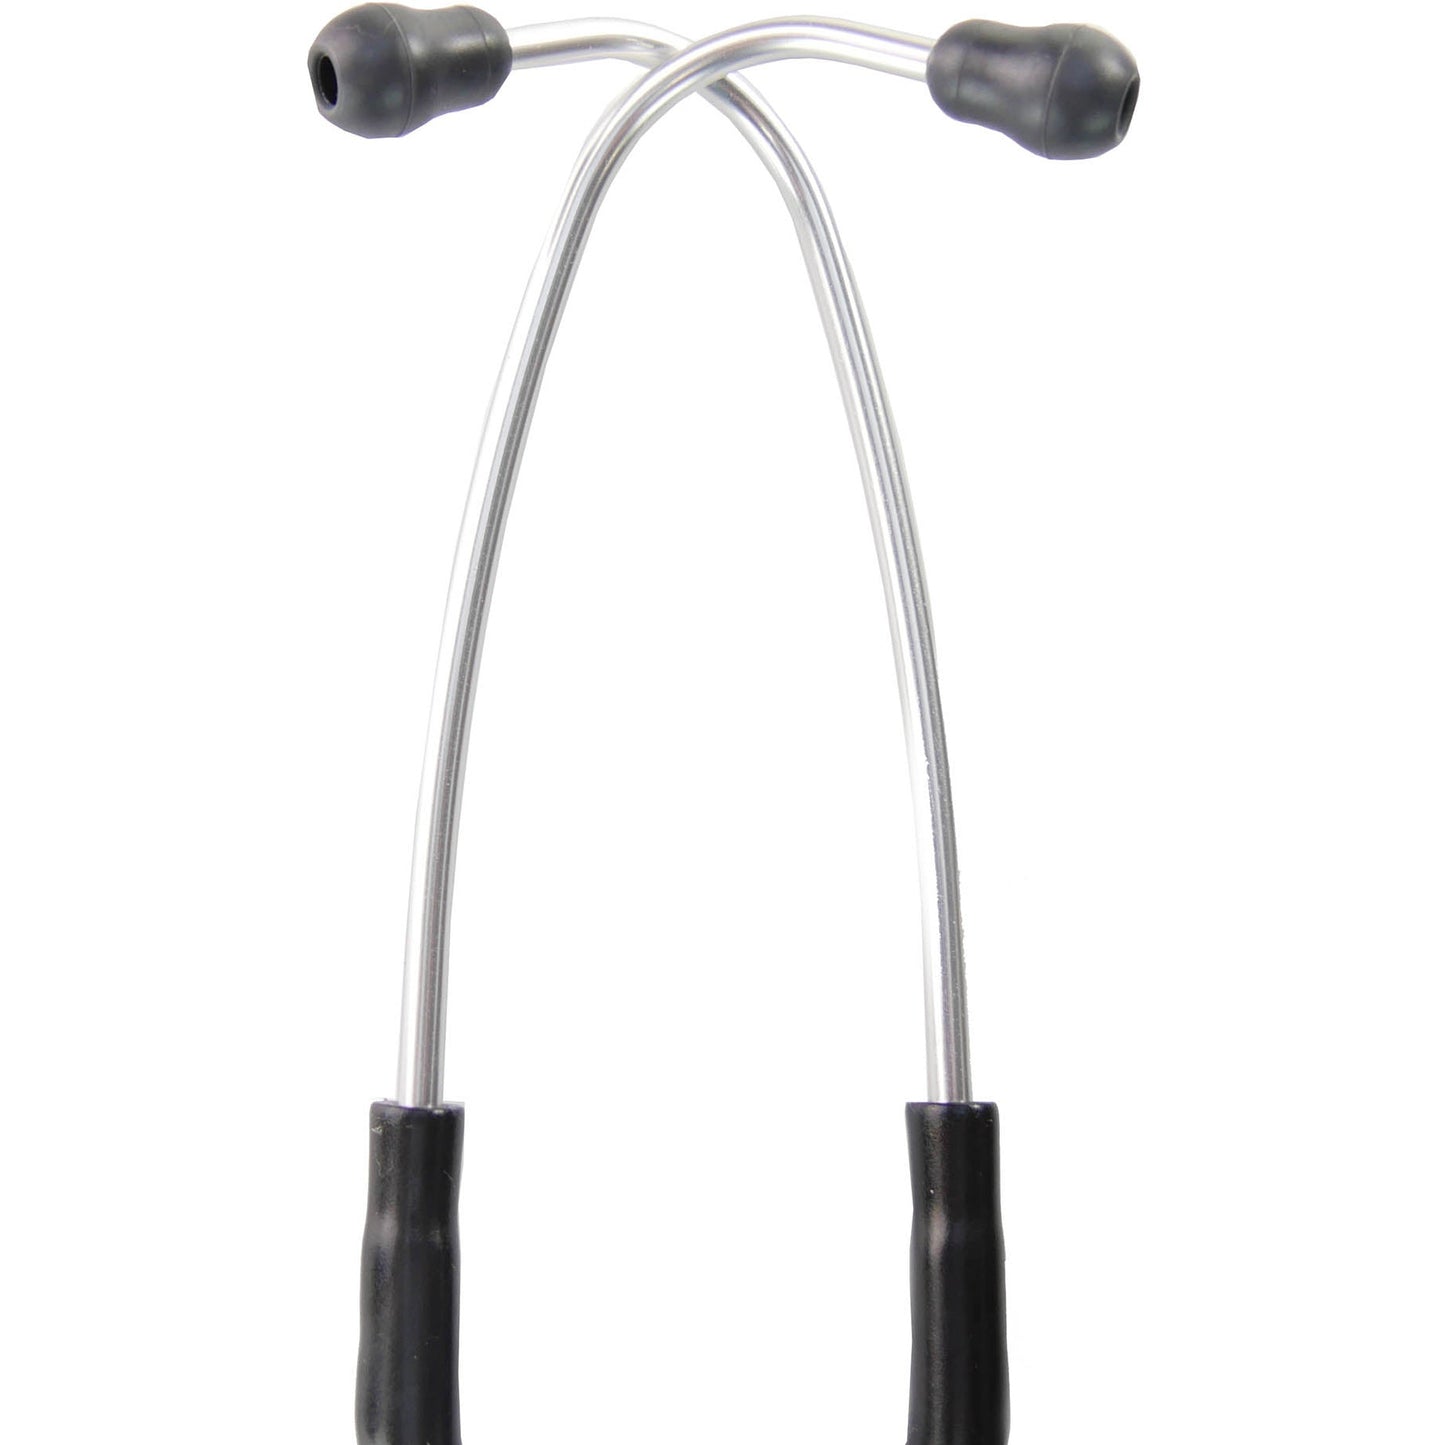 Littmann Classic II Infant Stethoscope: Black 2114